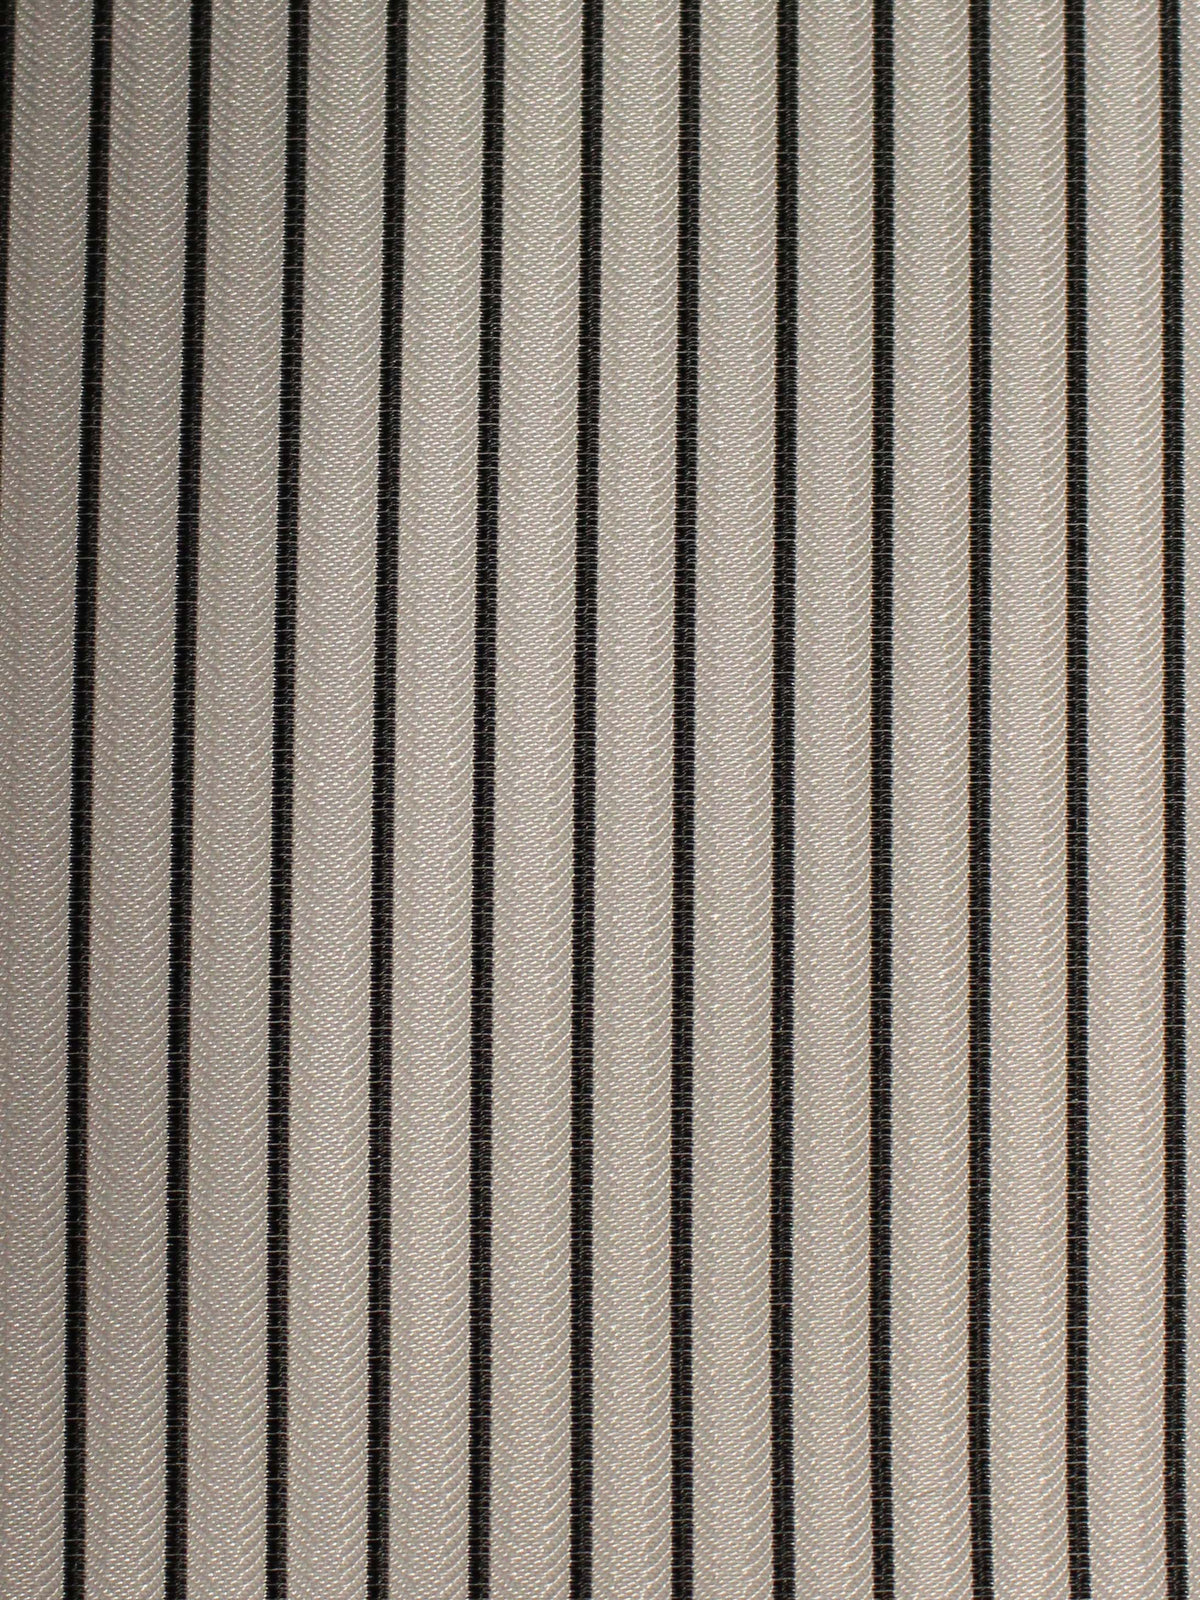 Black & White Waistcoat Fabric - Moscow